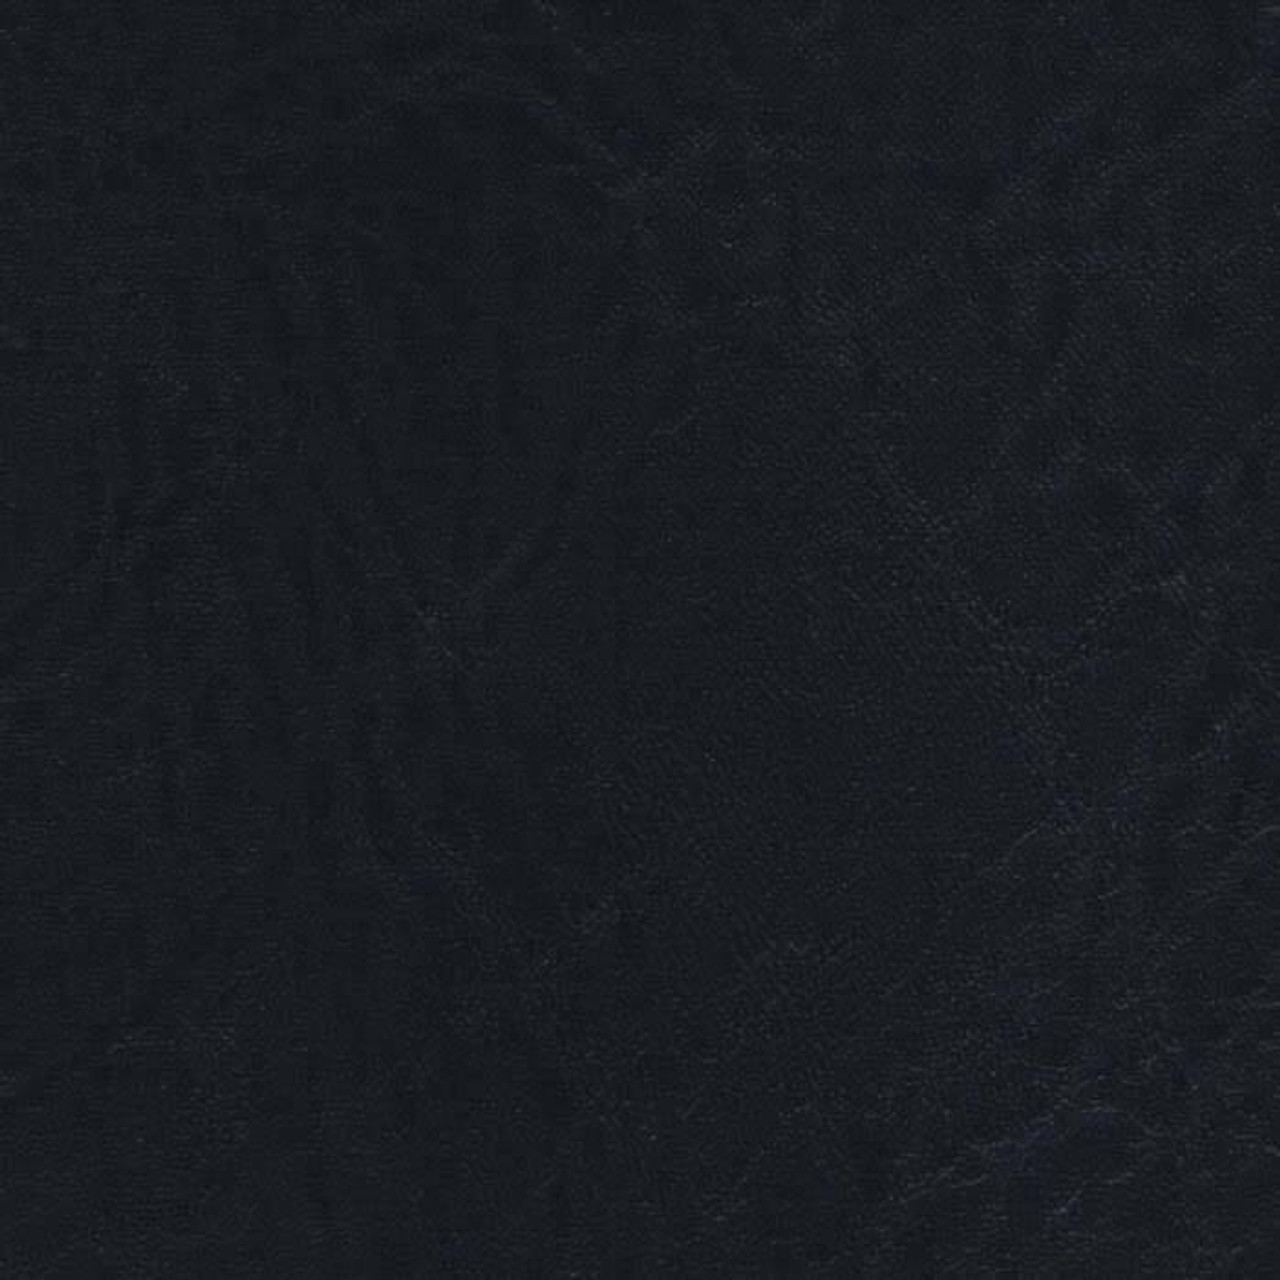 Ebony Black Marine Vinyl Fabric, Spradling Softside HEIDI SOFT, Upholstery Vinyl for Boats / Automotive / Commercial Seating, 54W